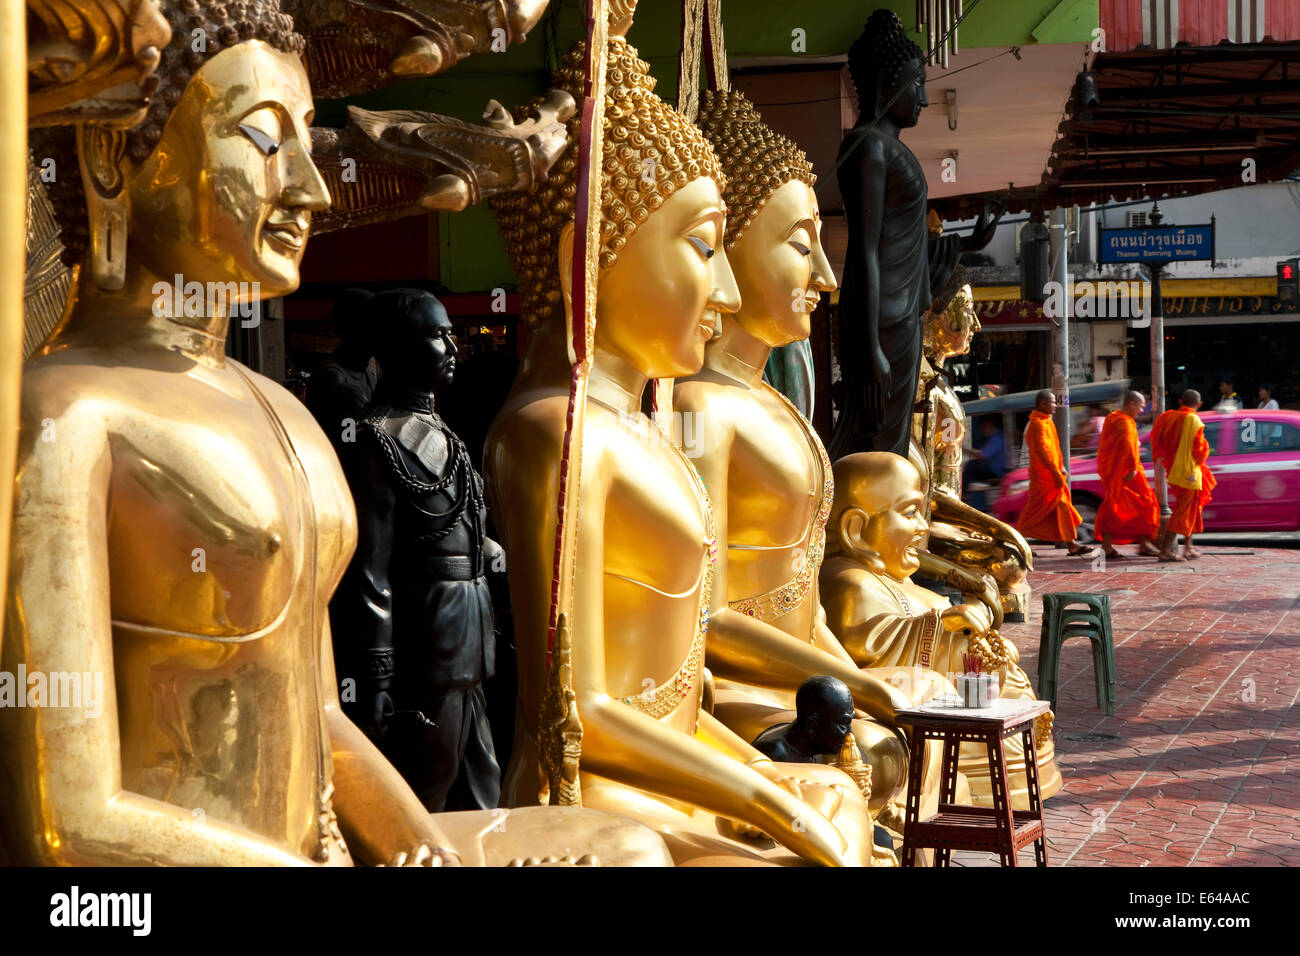 Buddha-Statuen, Mönche und Tuk Tuk, Straßenszene, Bangkok, Thailand Stockfoto